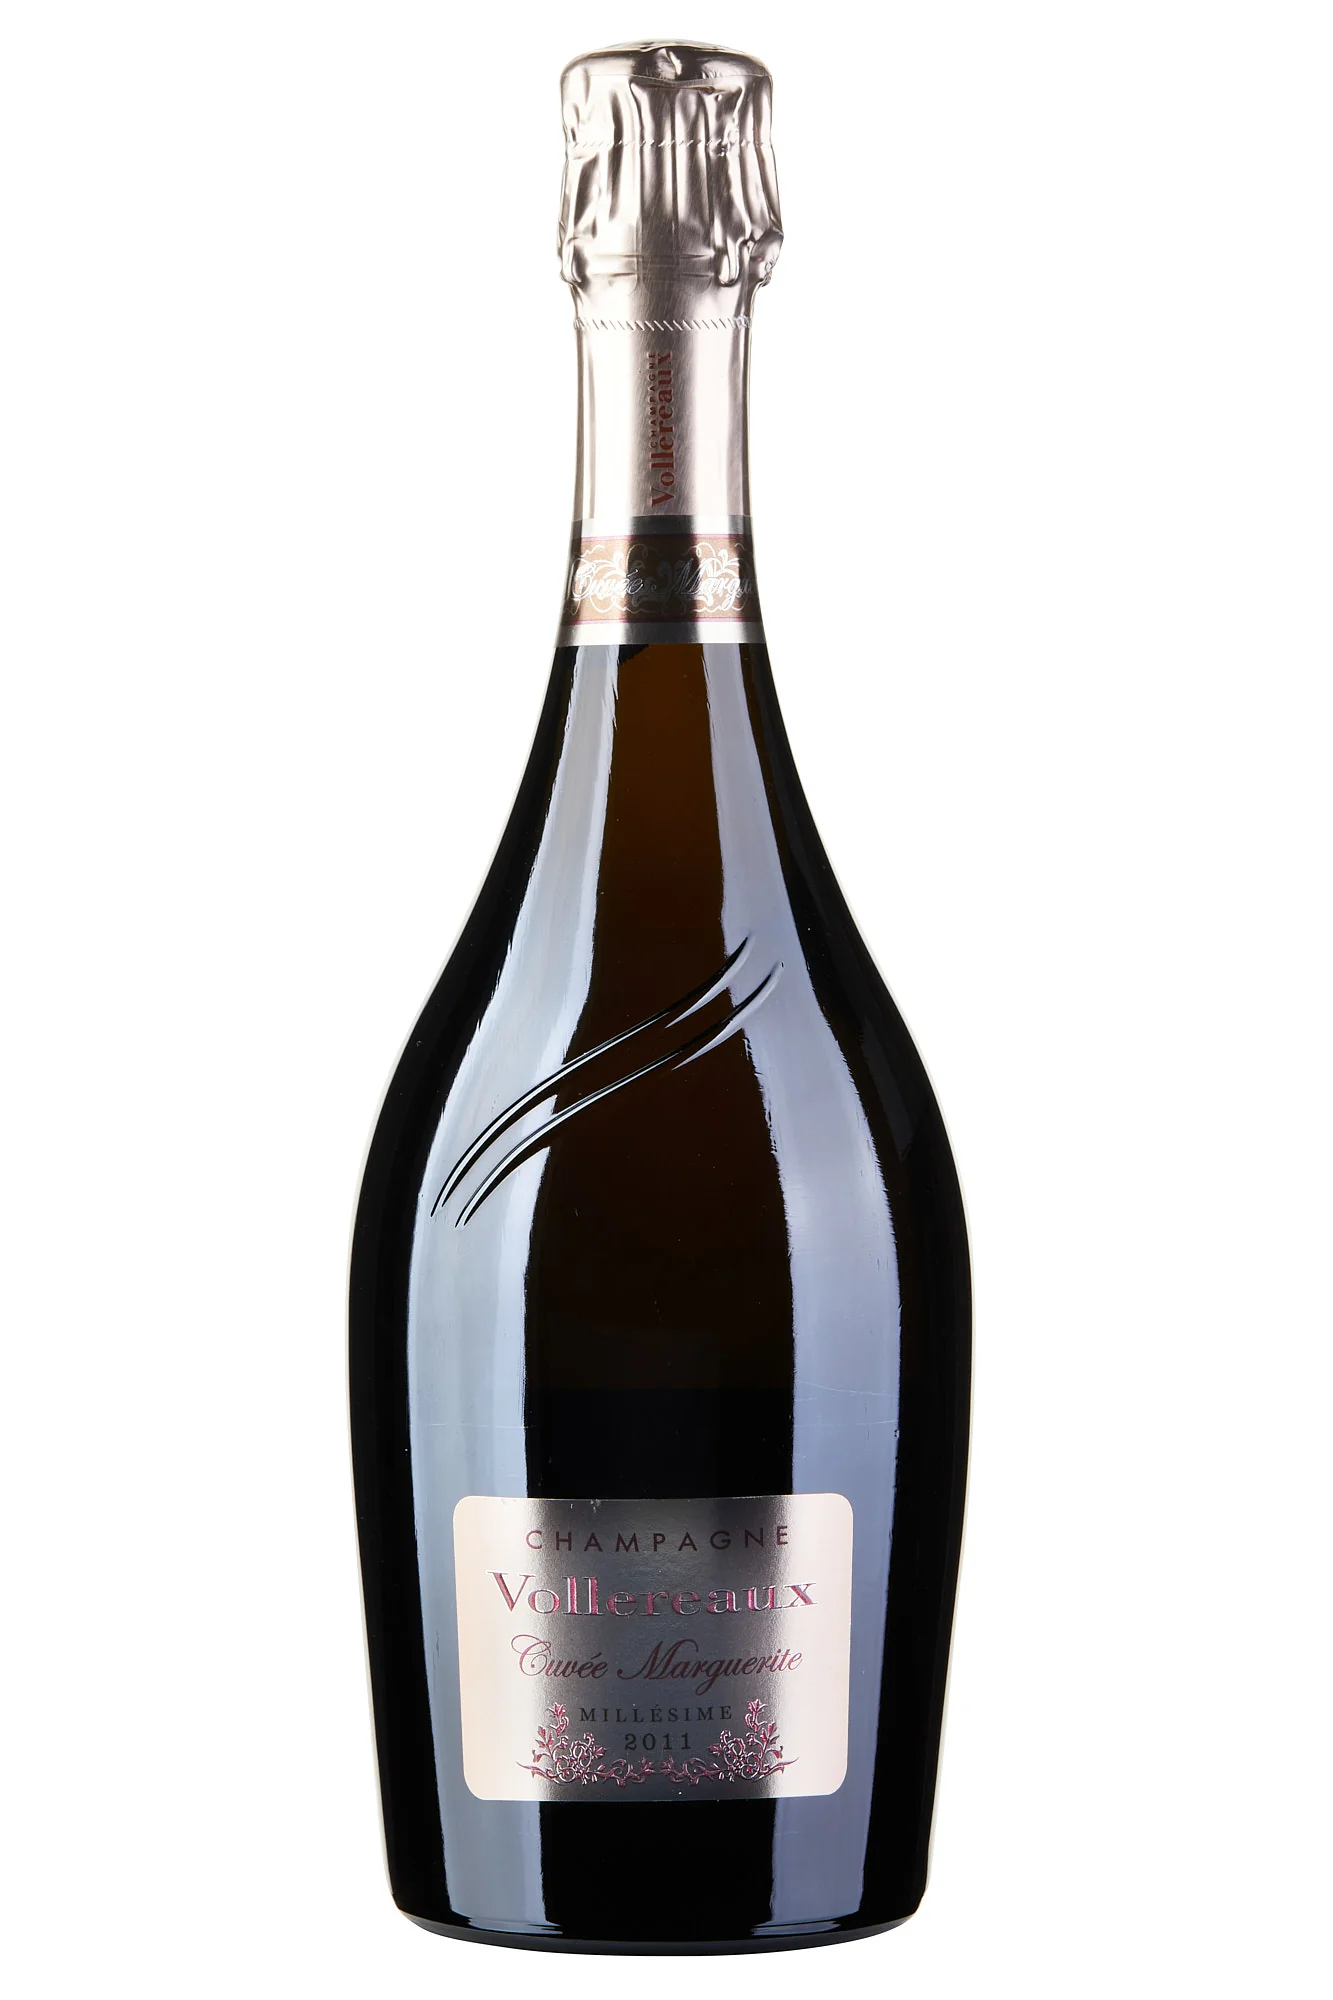 2011 Champagne Vollereaux Cuvee Marguerite Brut